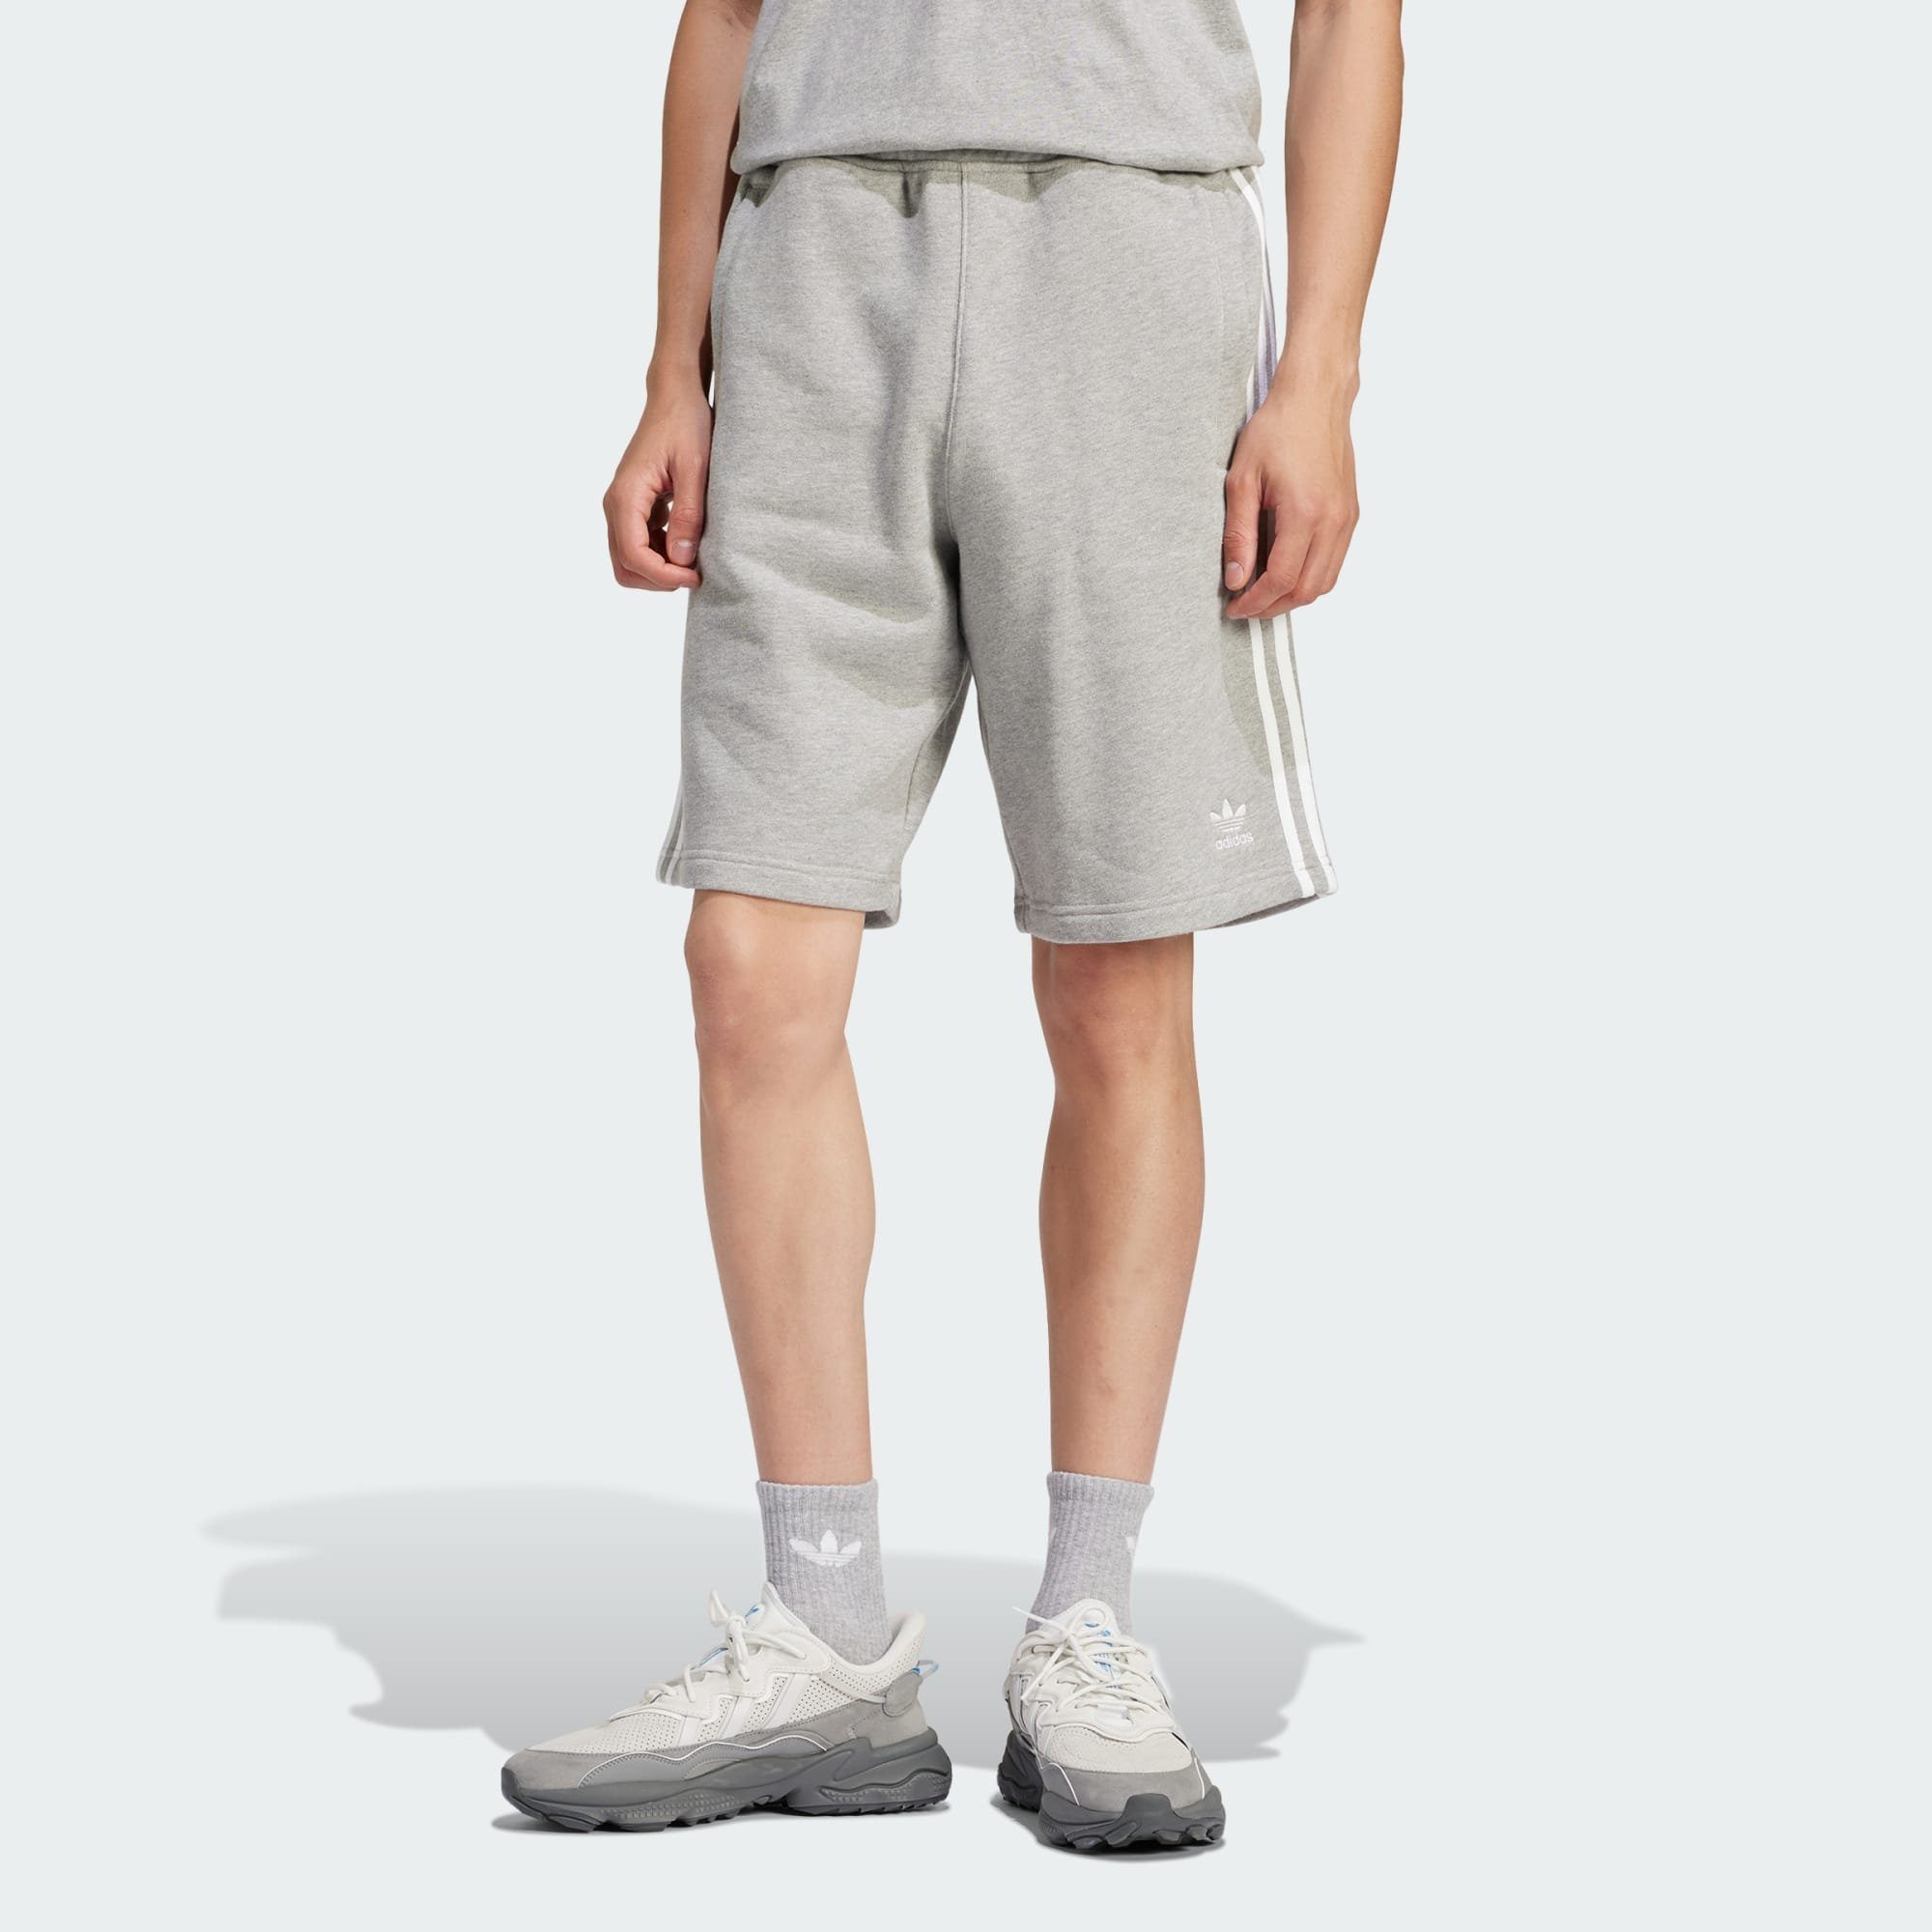 ADICOLOR SHORTS adidas Originals Medium Shorts 3-STREIFEN Grey Heather